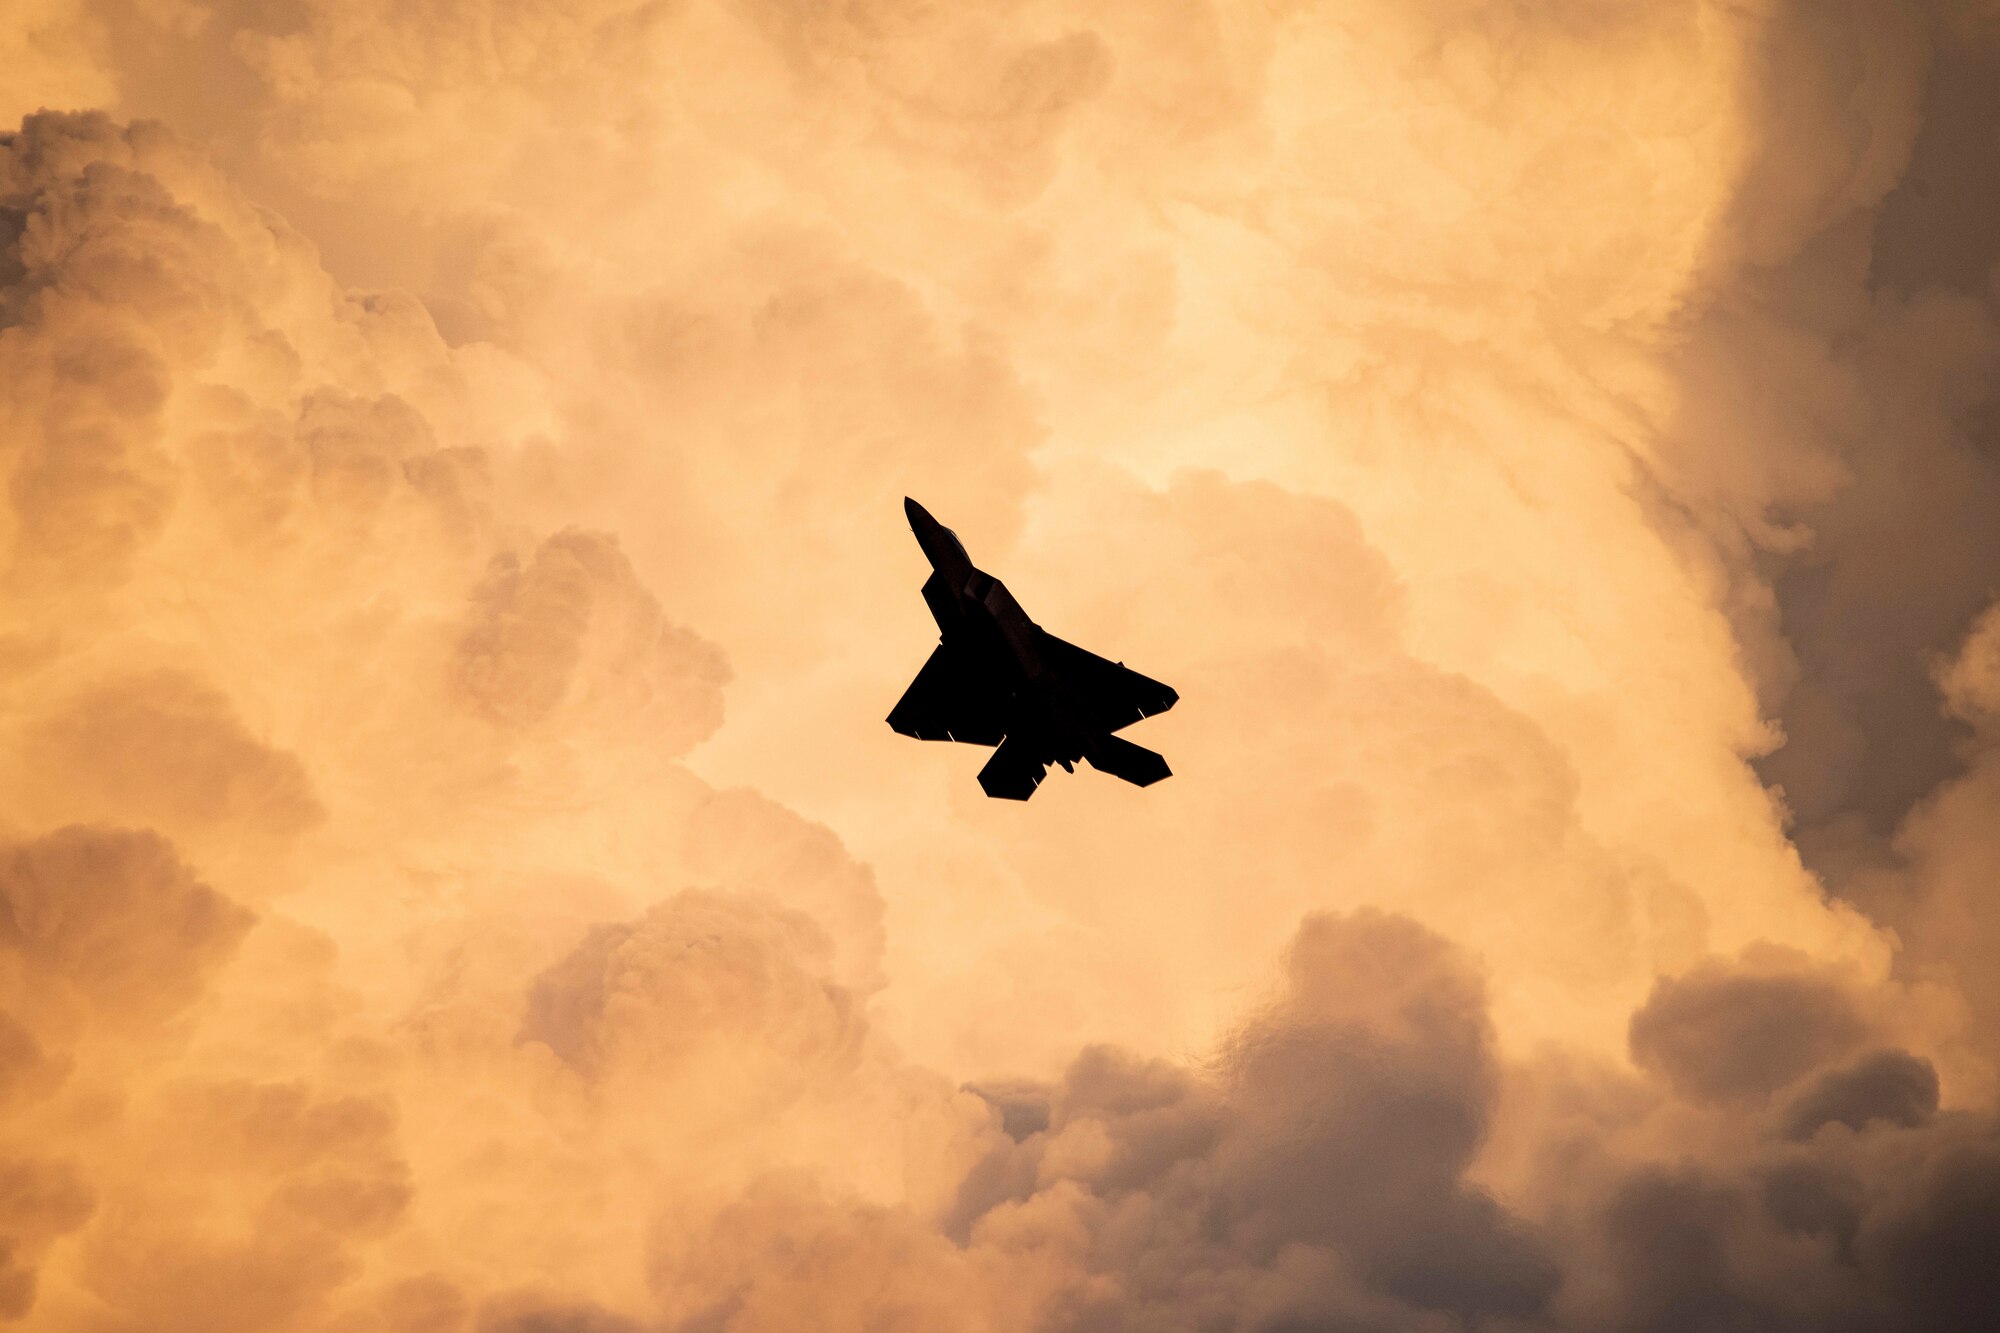 F-22 Raptor Demonstration Team commander, flies a twilight demonstration